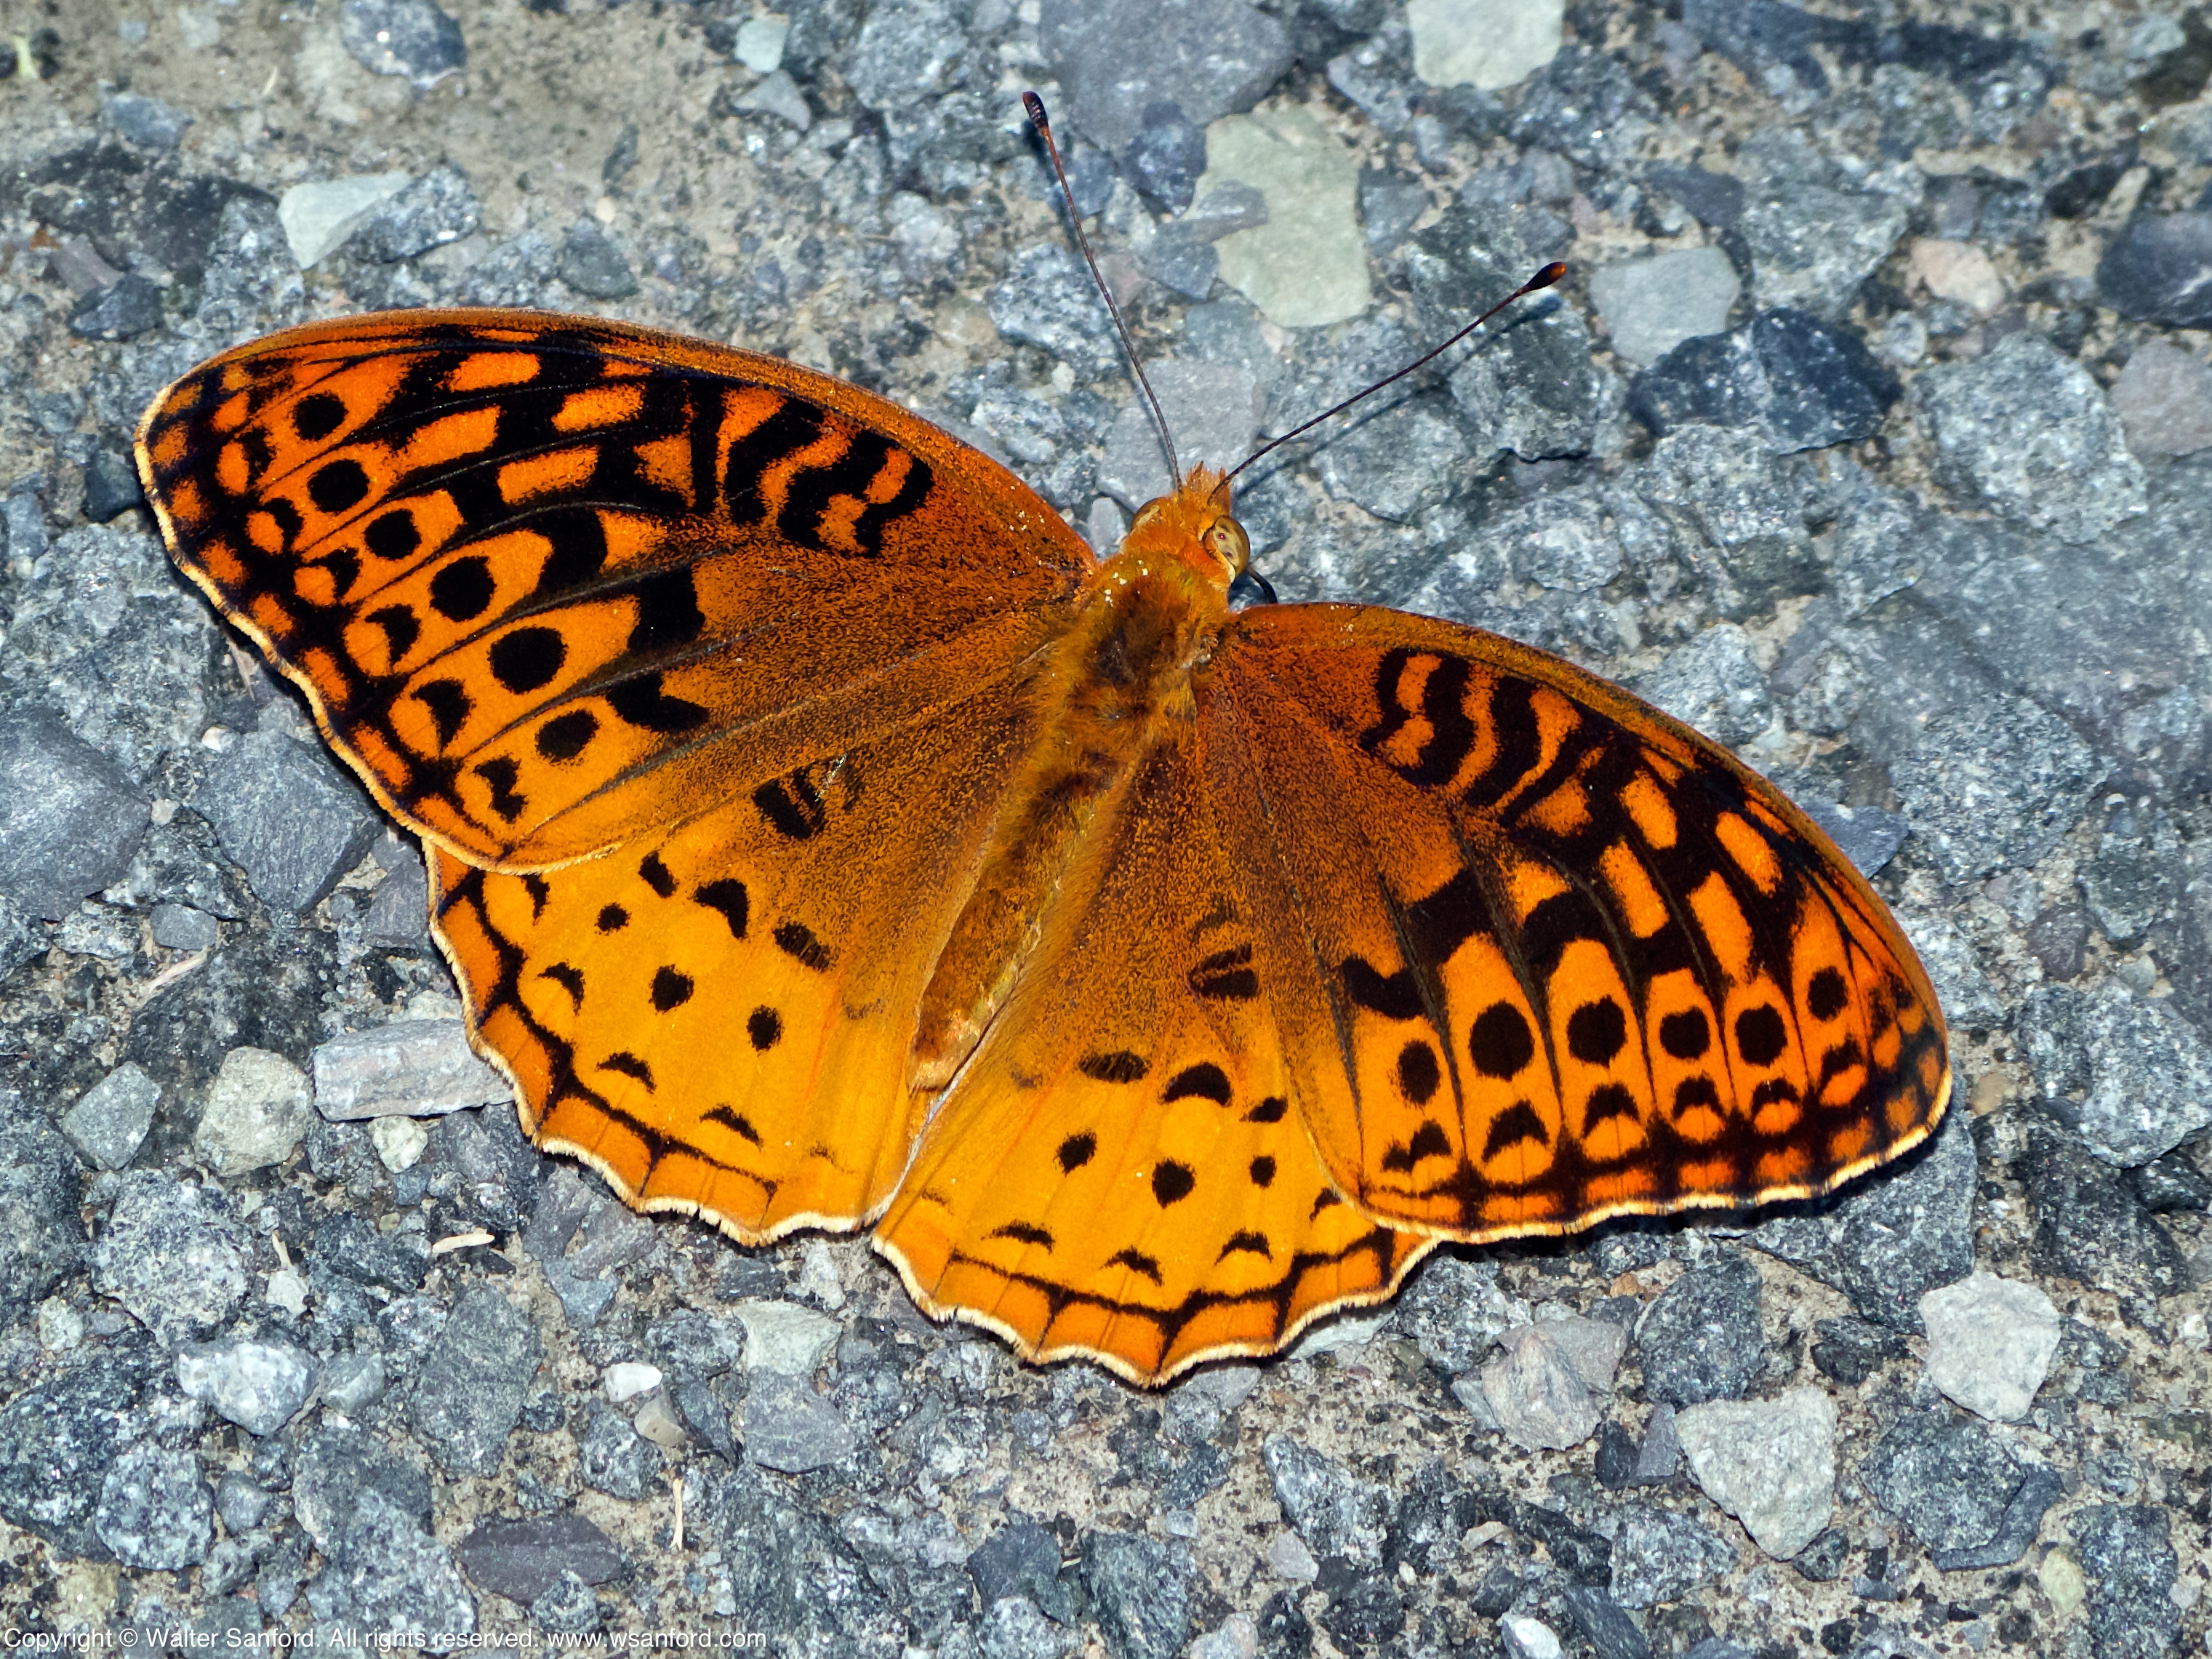 Great Spangled Fritillary butterfly | walter sanford's photoblog